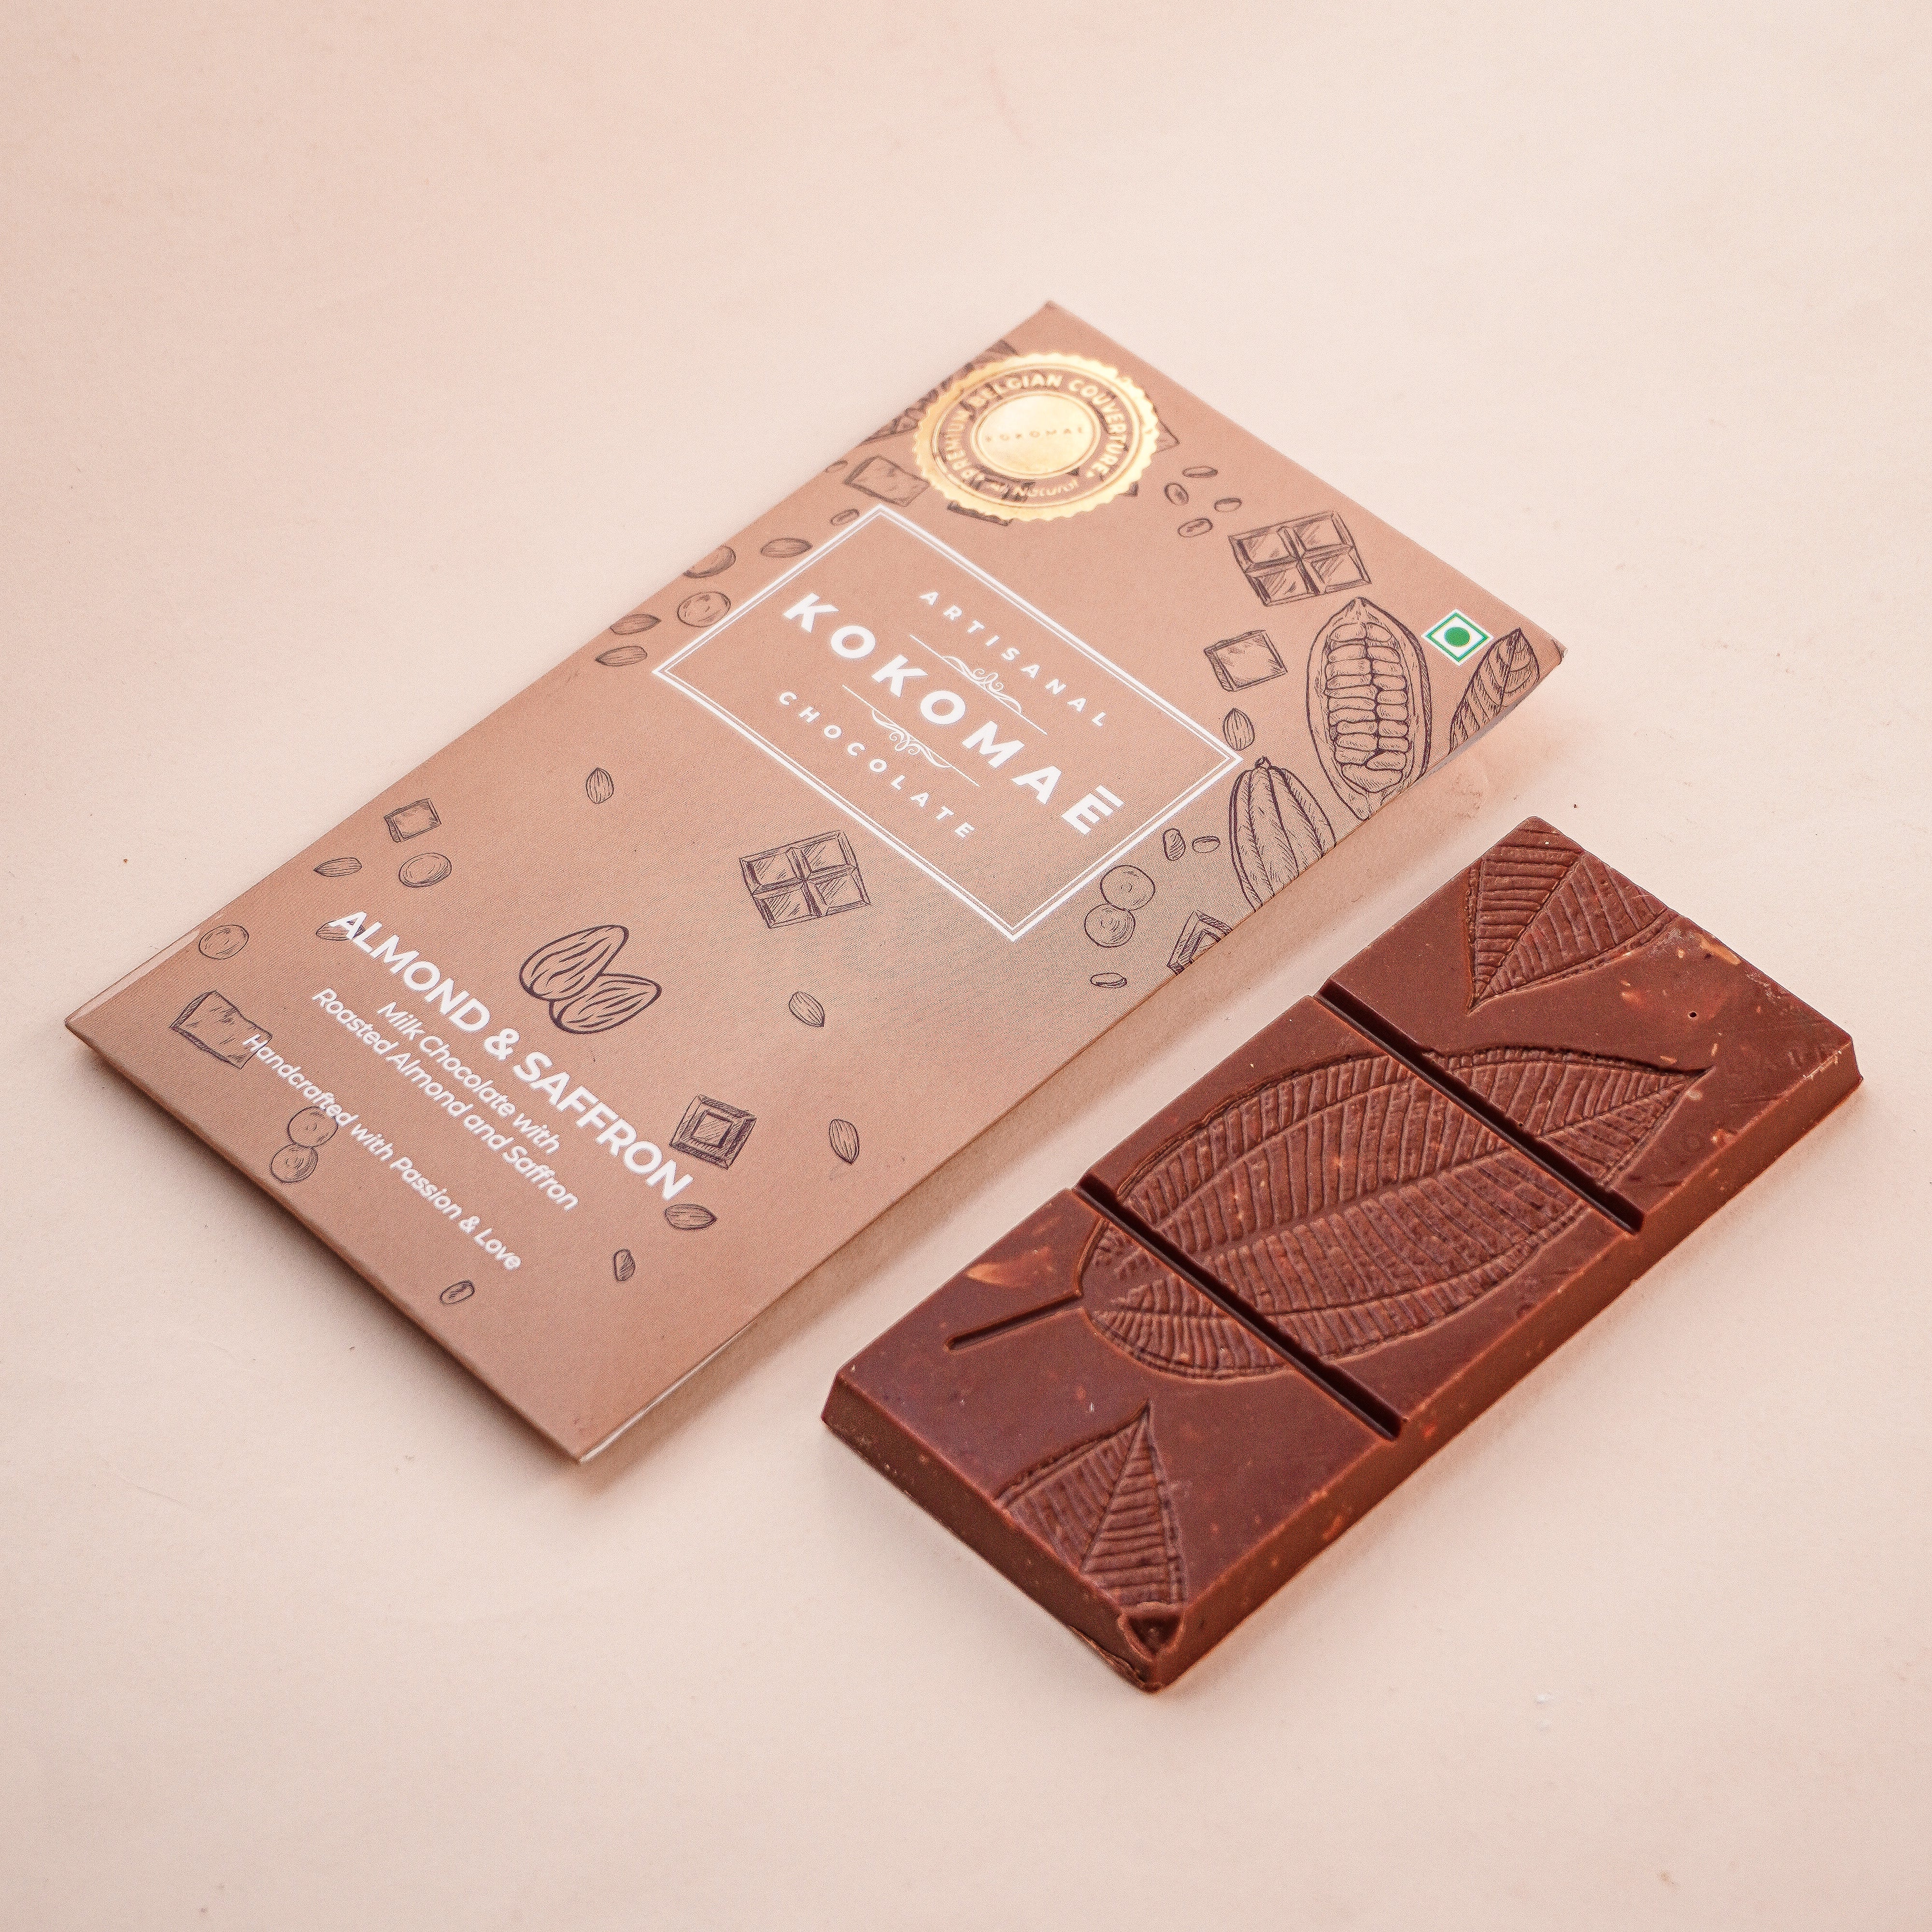 Kokomaē Almond and Saffron Belgian Delight Milk Chocolate Bar with Pure 33.6% Cocoa Butter